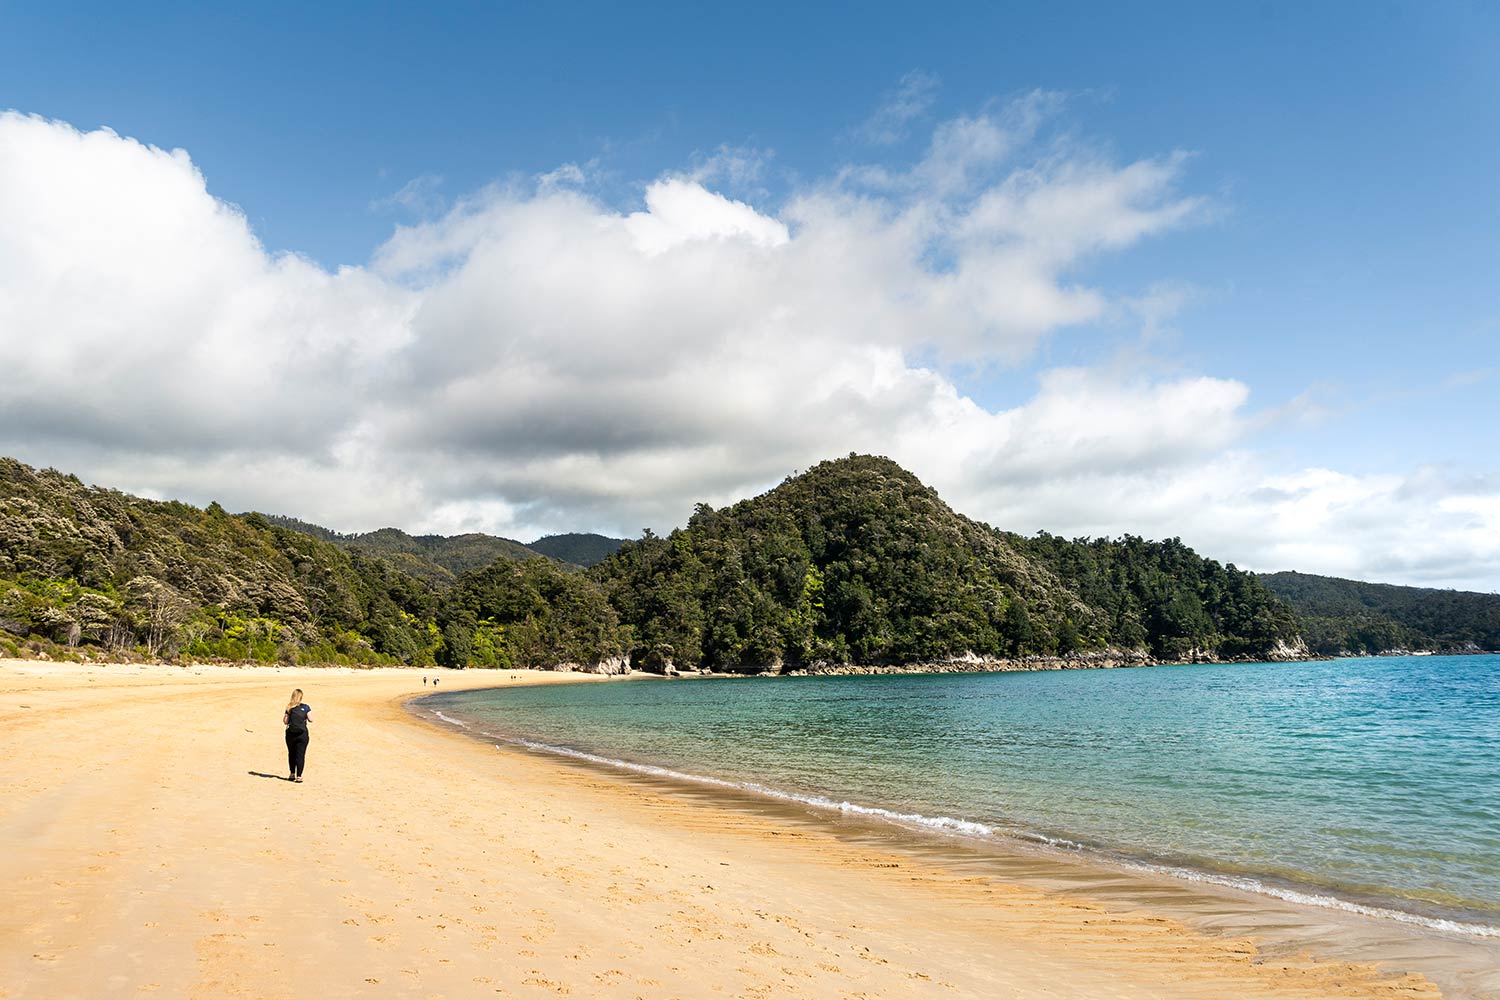 Plage, Randonnée, Abel Tasman, Nouvelle-Zélande / Beach, Abel Tasman Great Walk, New Zealand, NZ